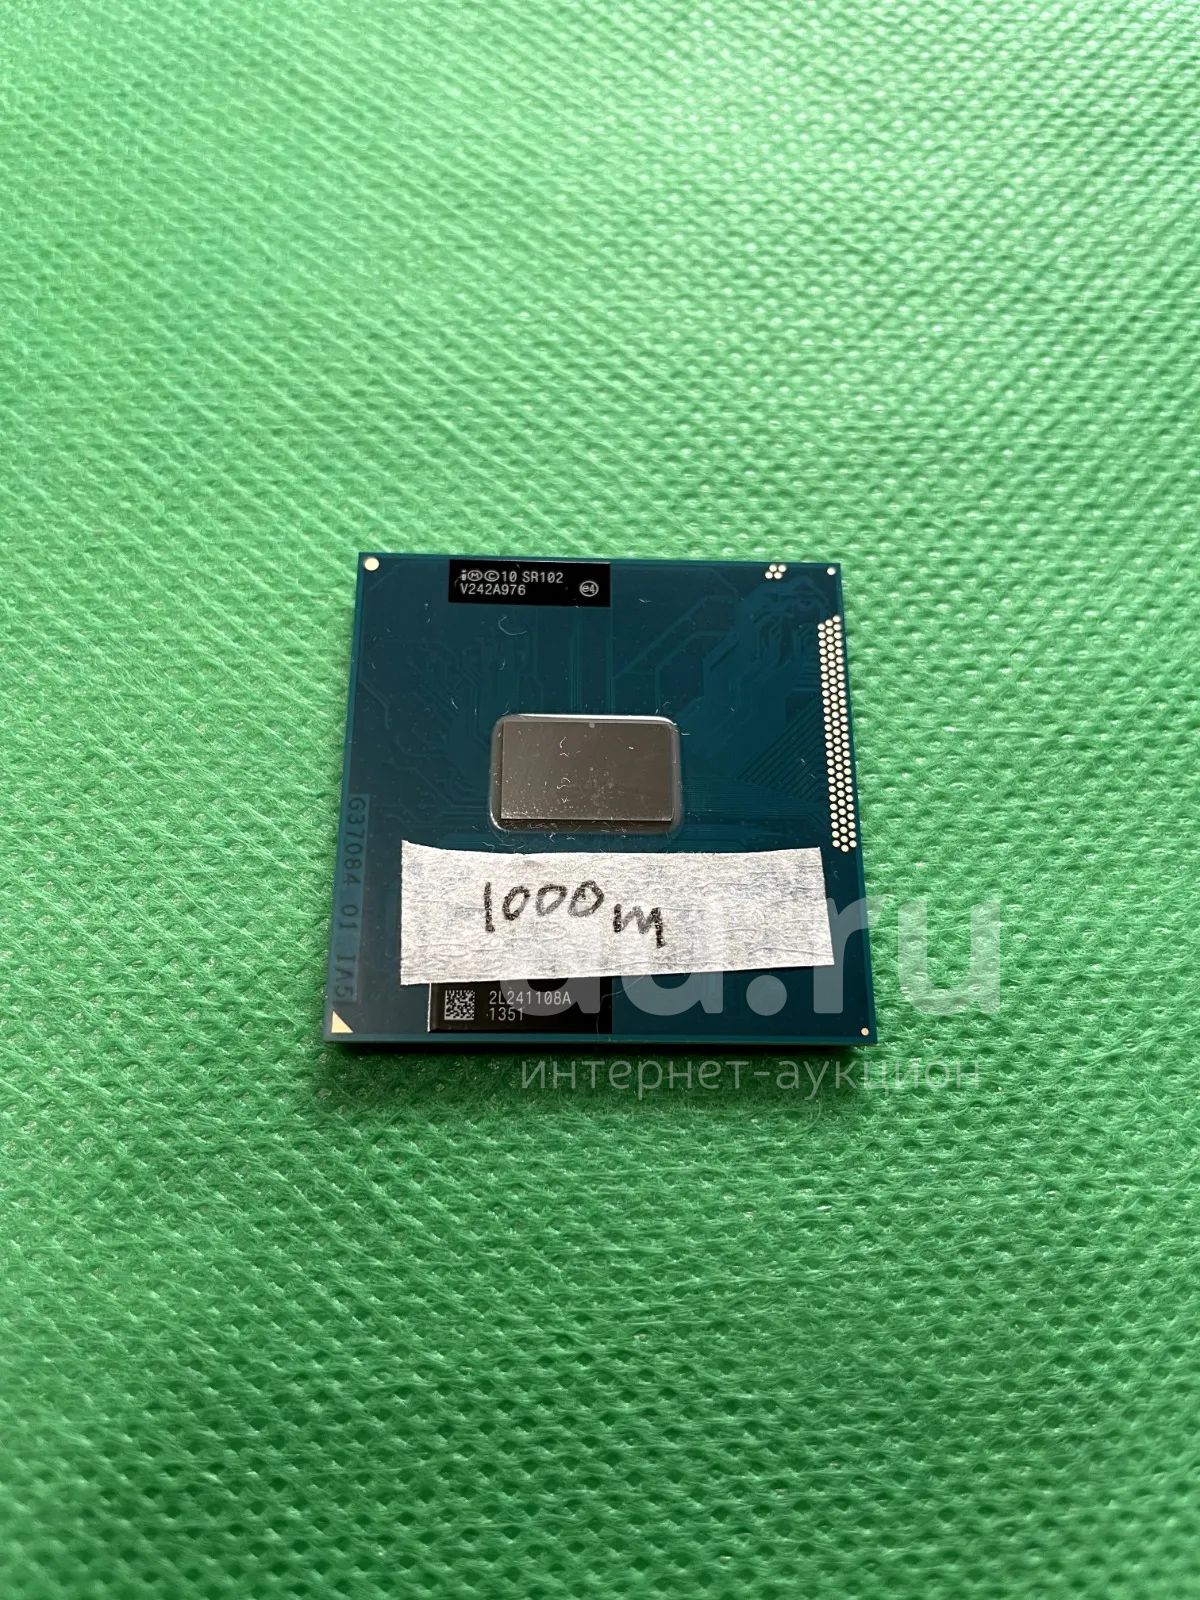 Intel Celeron 1000m.